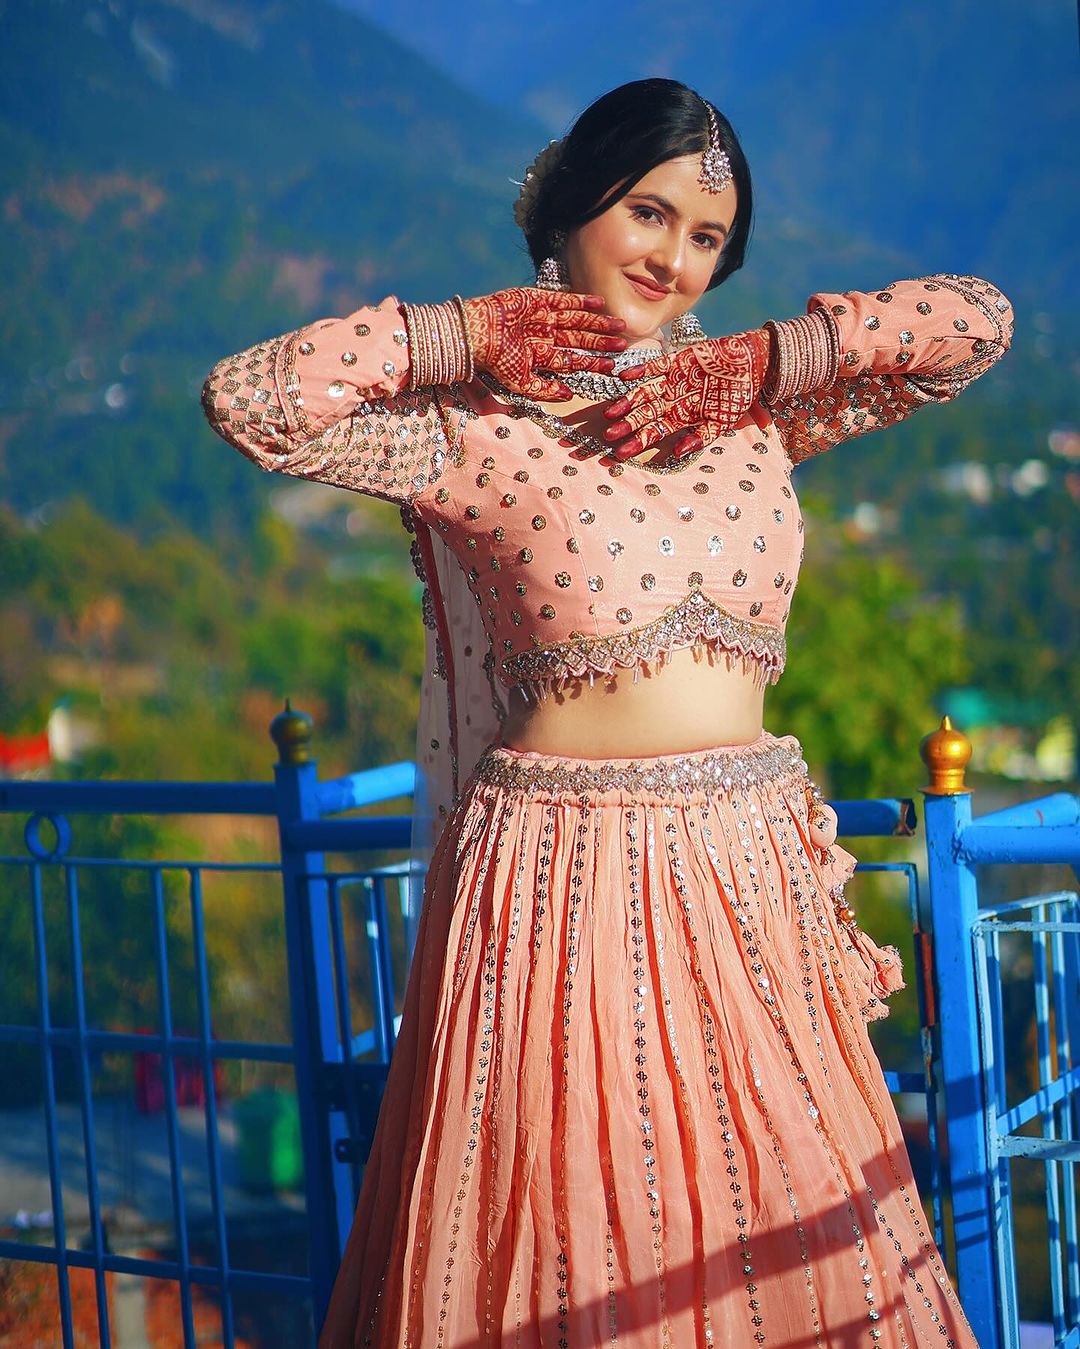 Singer preksha rana looking beautiful in this clicks-Preksha Rana, Preksharana Photos,Spicy Hot Pics,Images,High Resolution WallPapers Download